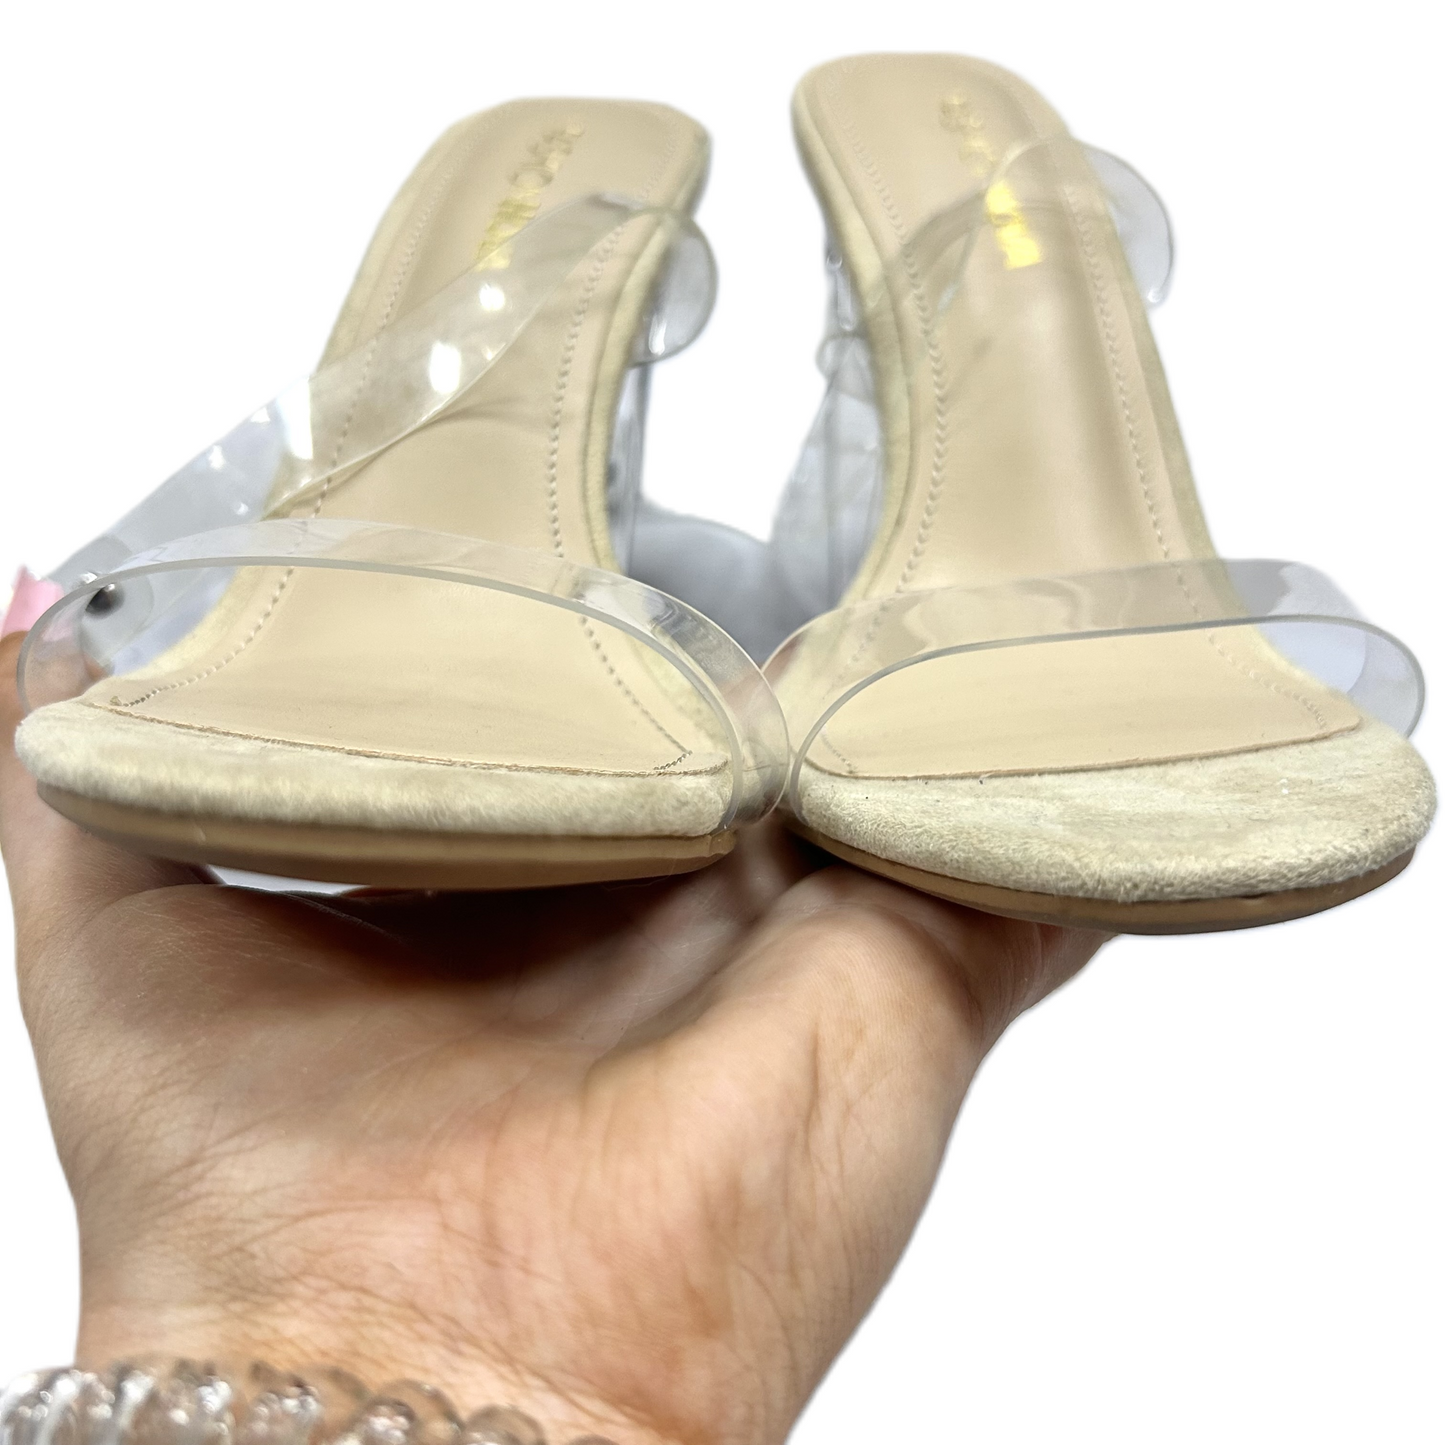 Sandals Heels Stiletto By Fashion Nova  Size: 5.5